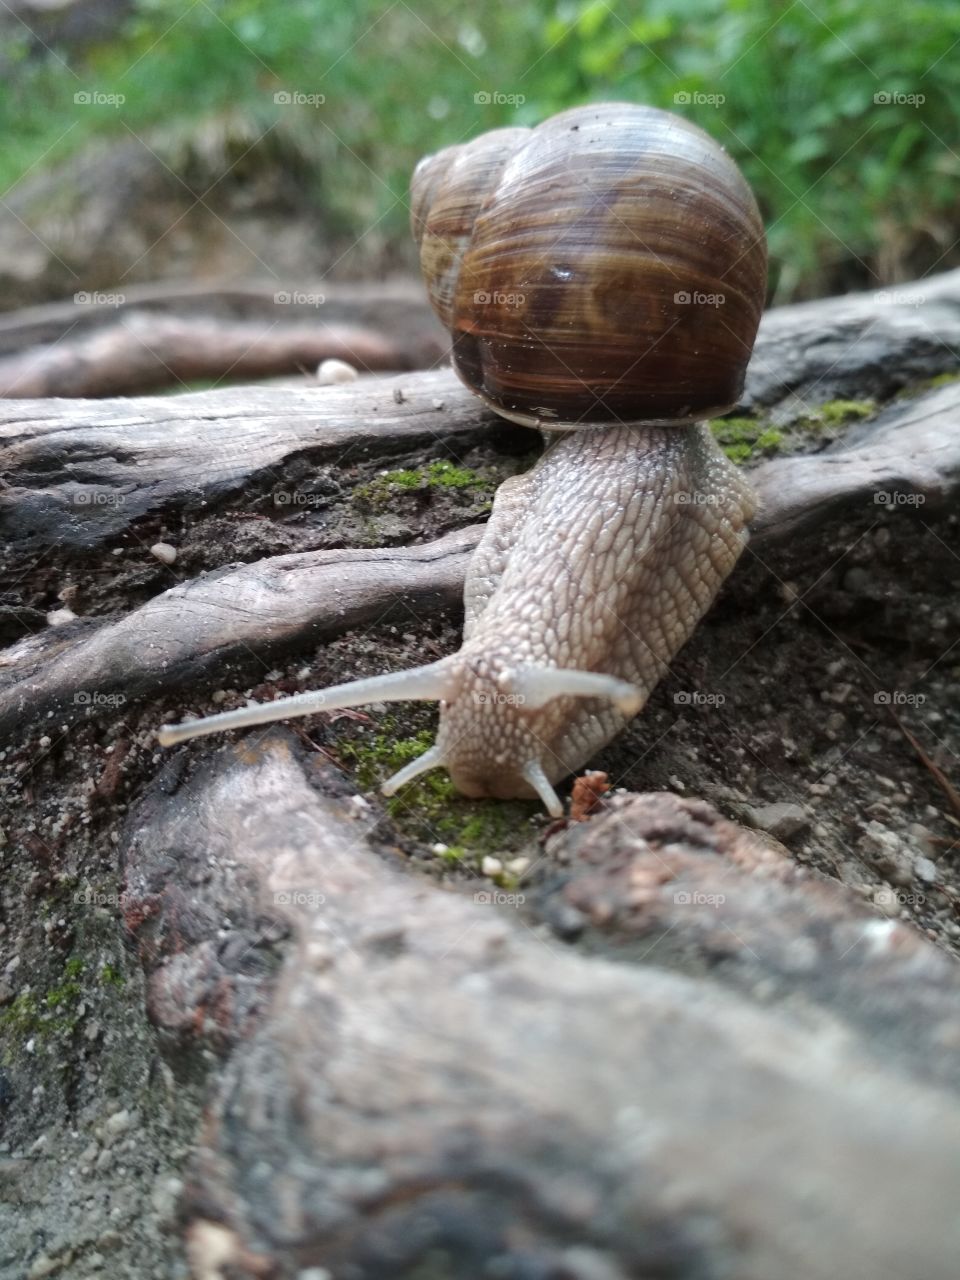 Snail Life